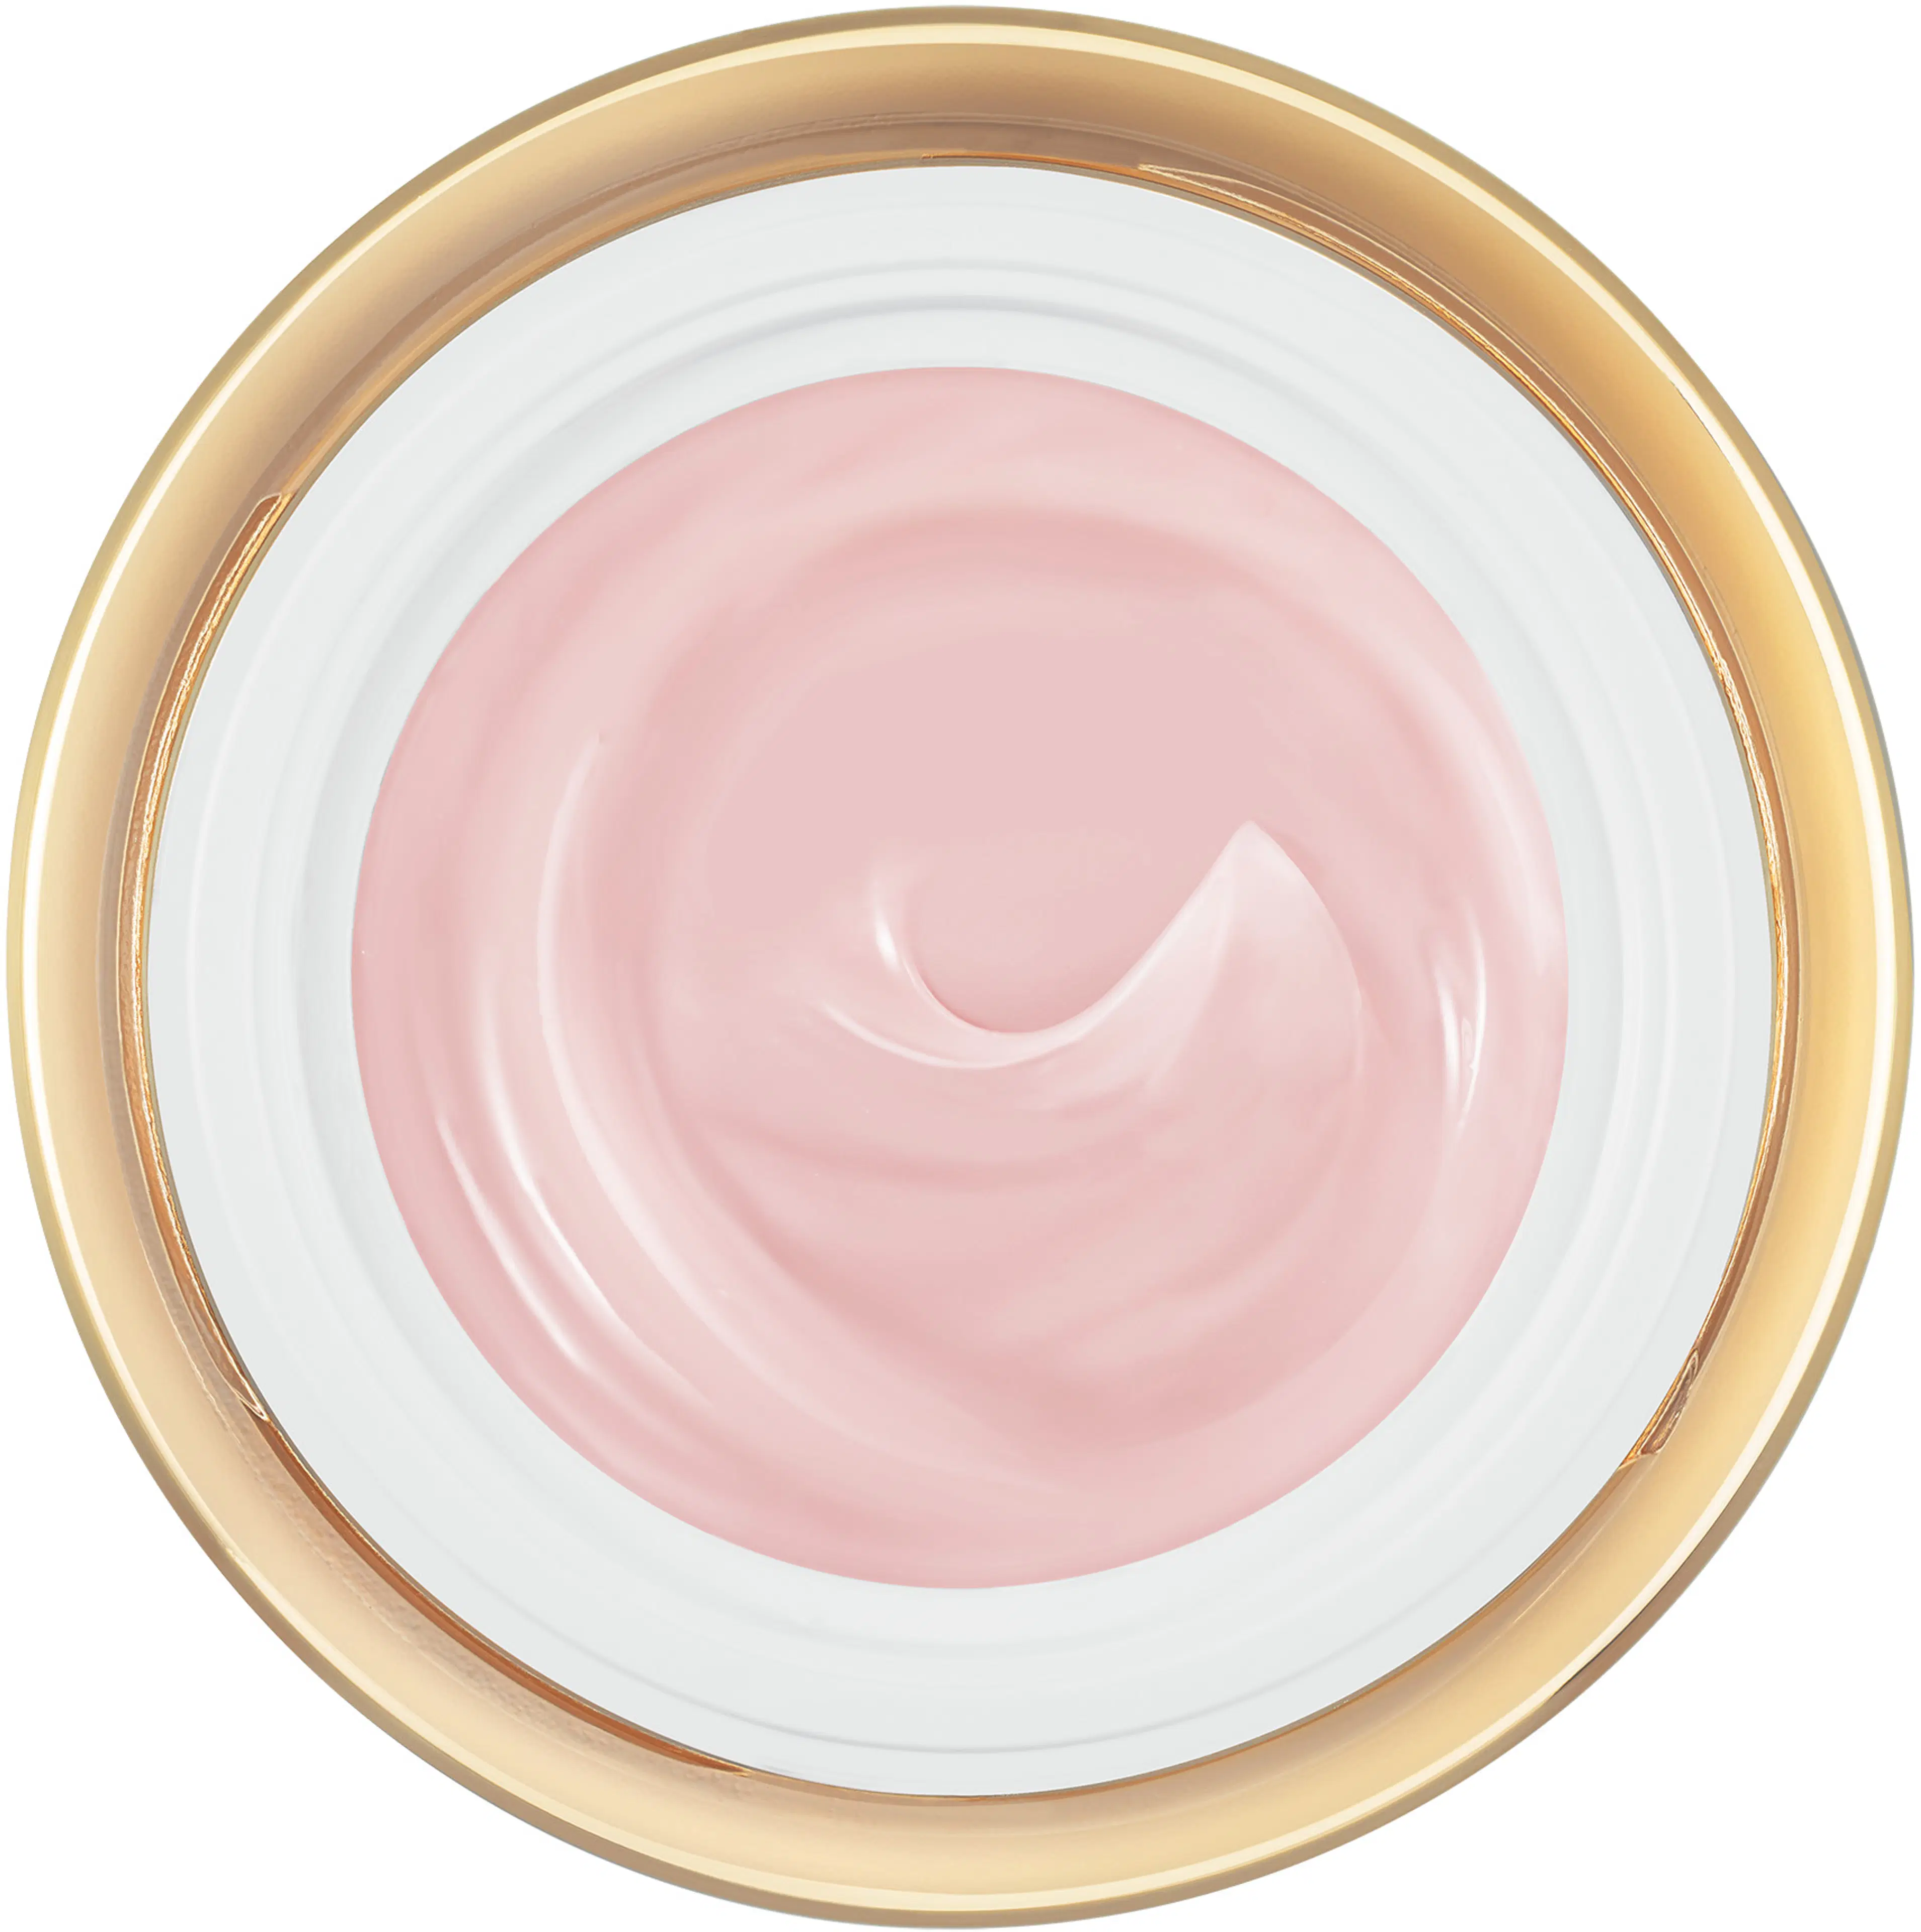 Lancôme Absolue Soft Cream hoitovoide 60 ml